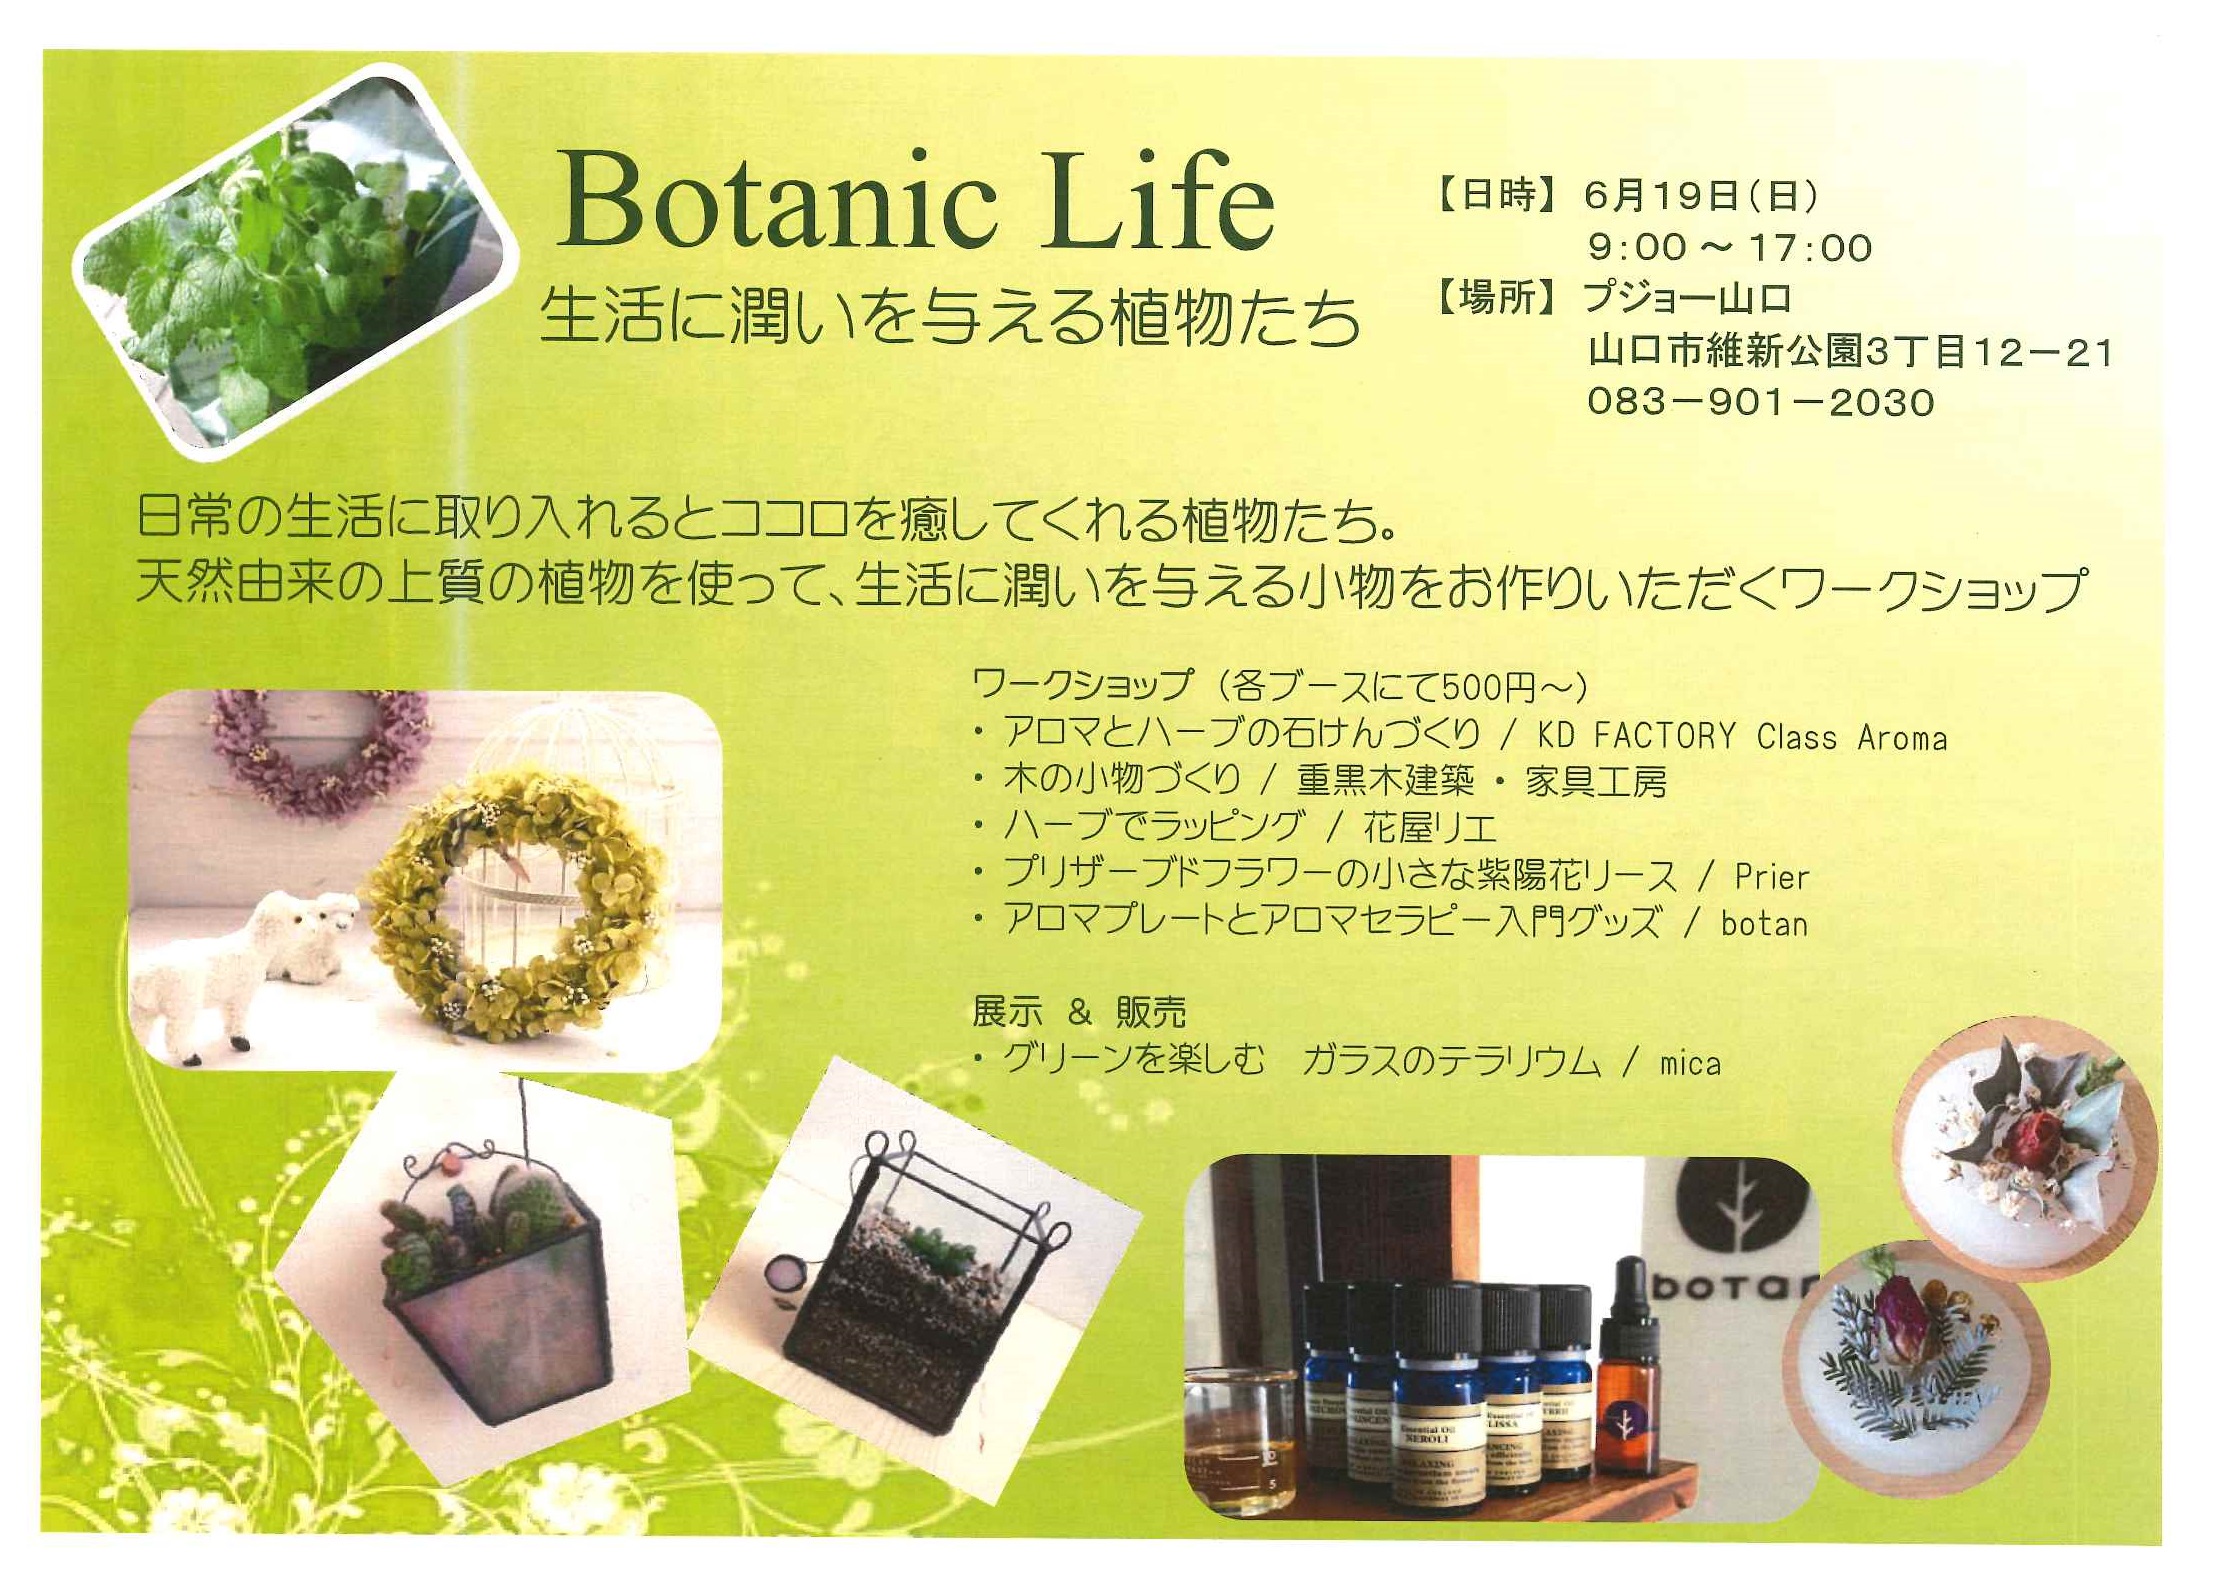 Botanic Life～生活に潤いをあたえる植物たち～